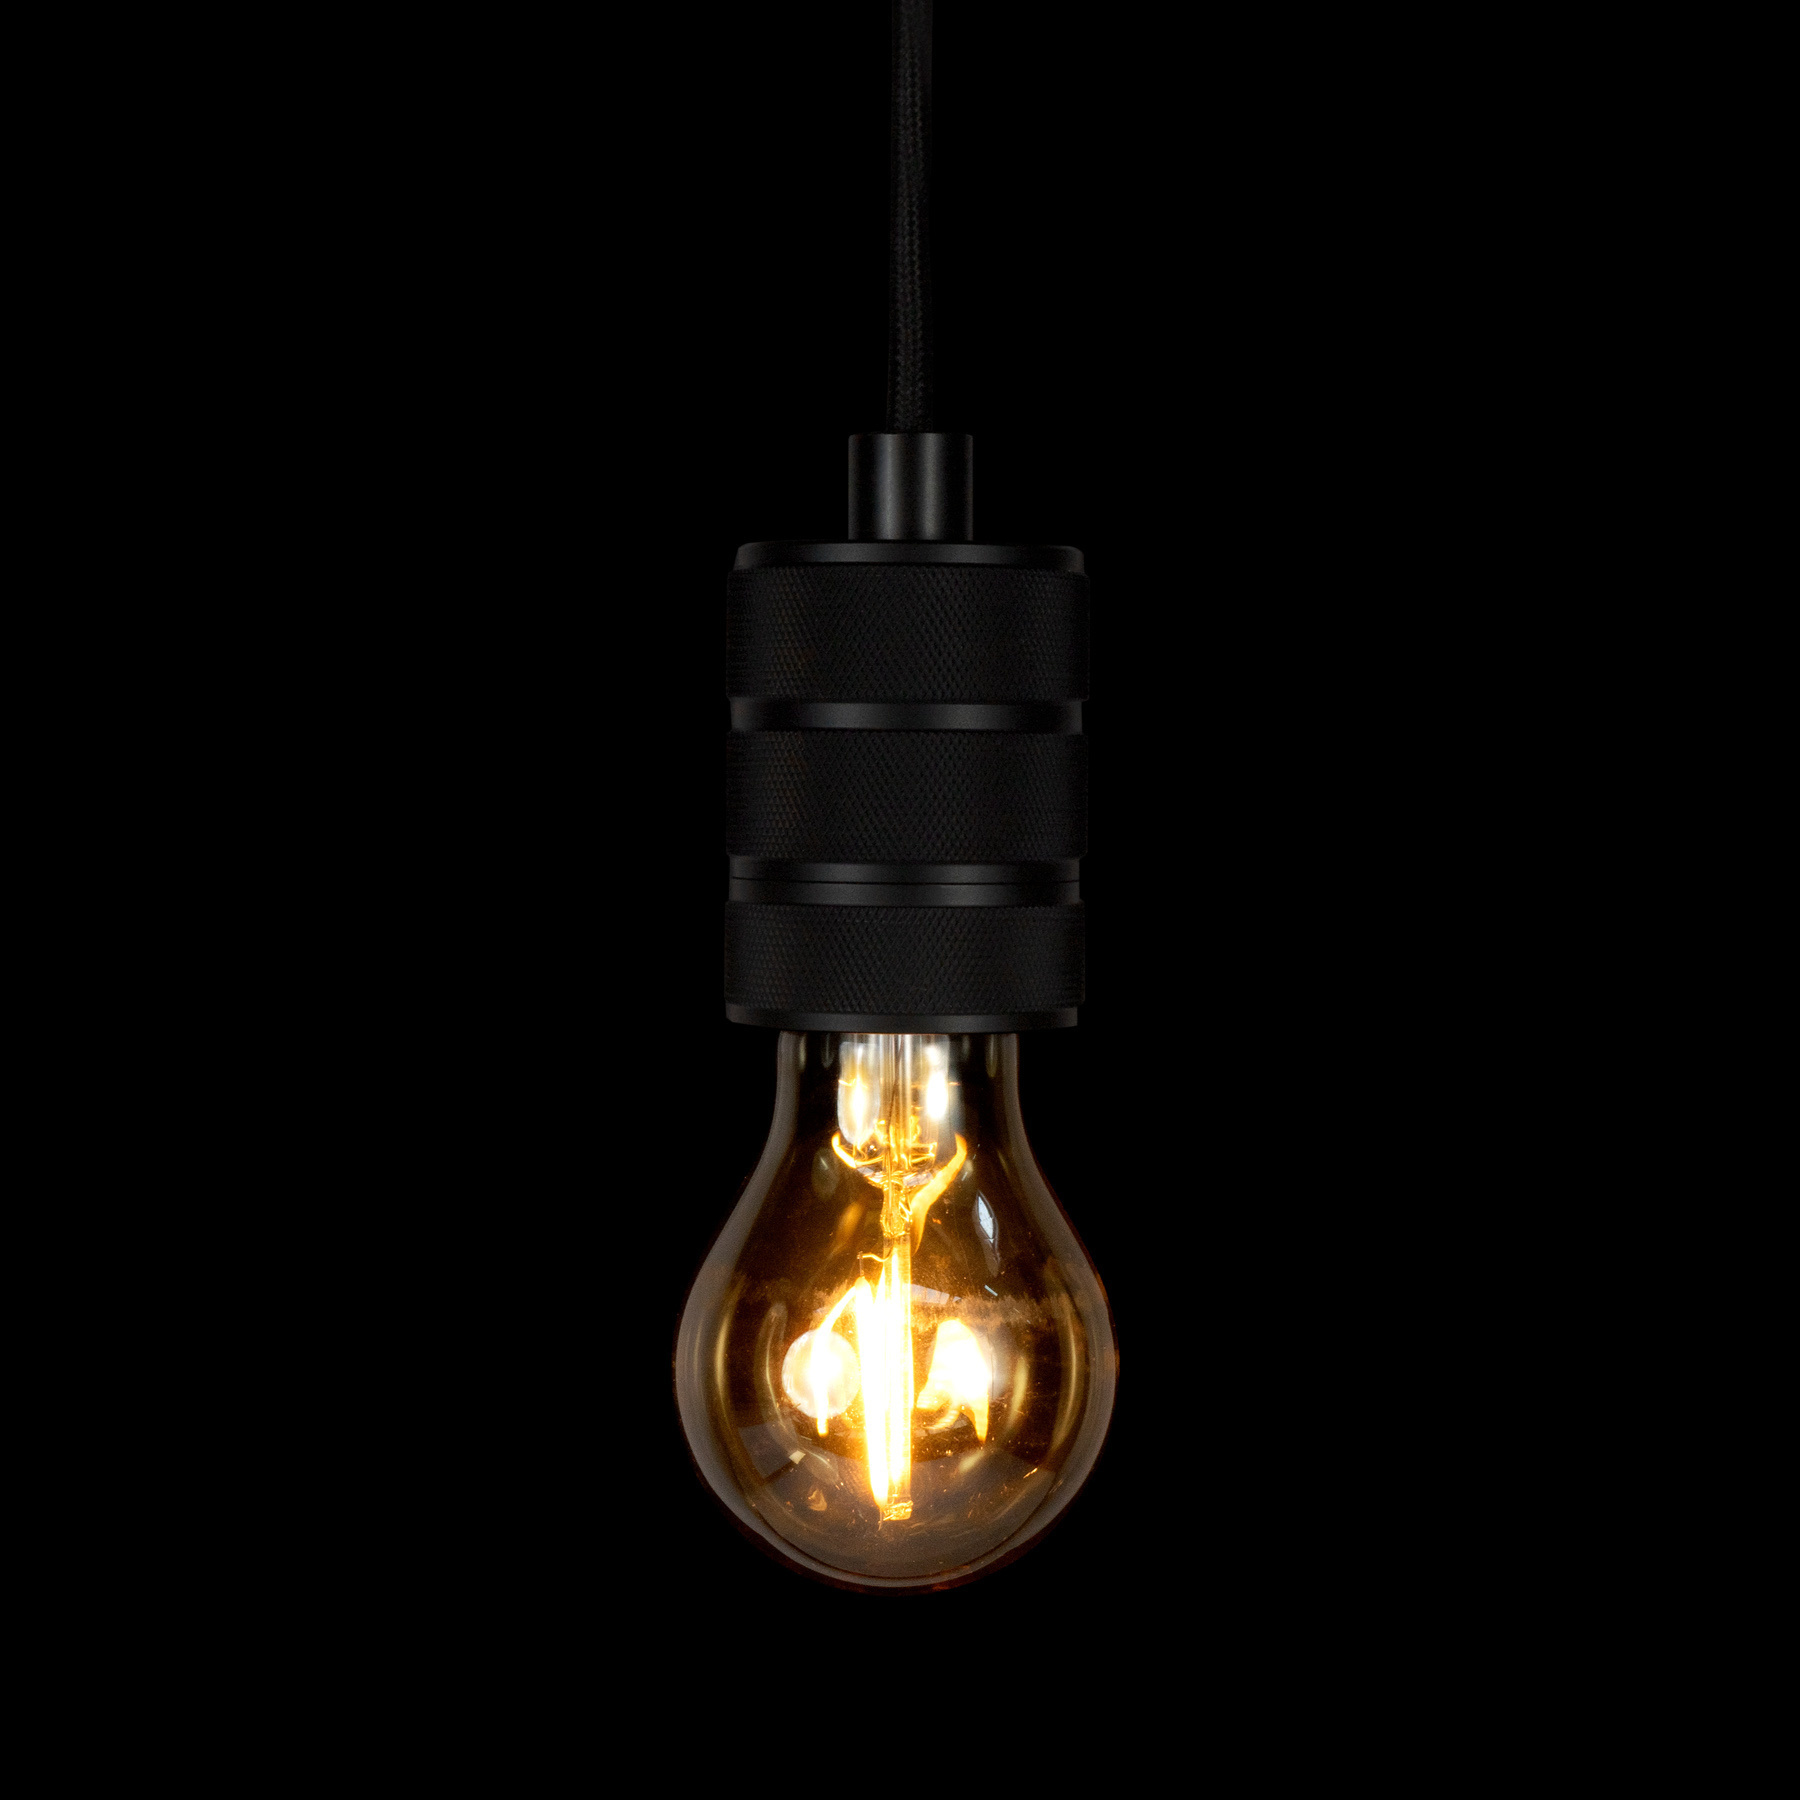 Ampoule LED Filament Cristal OSRAM E27 18W 2452LM Dimmable • IluminaShop  France